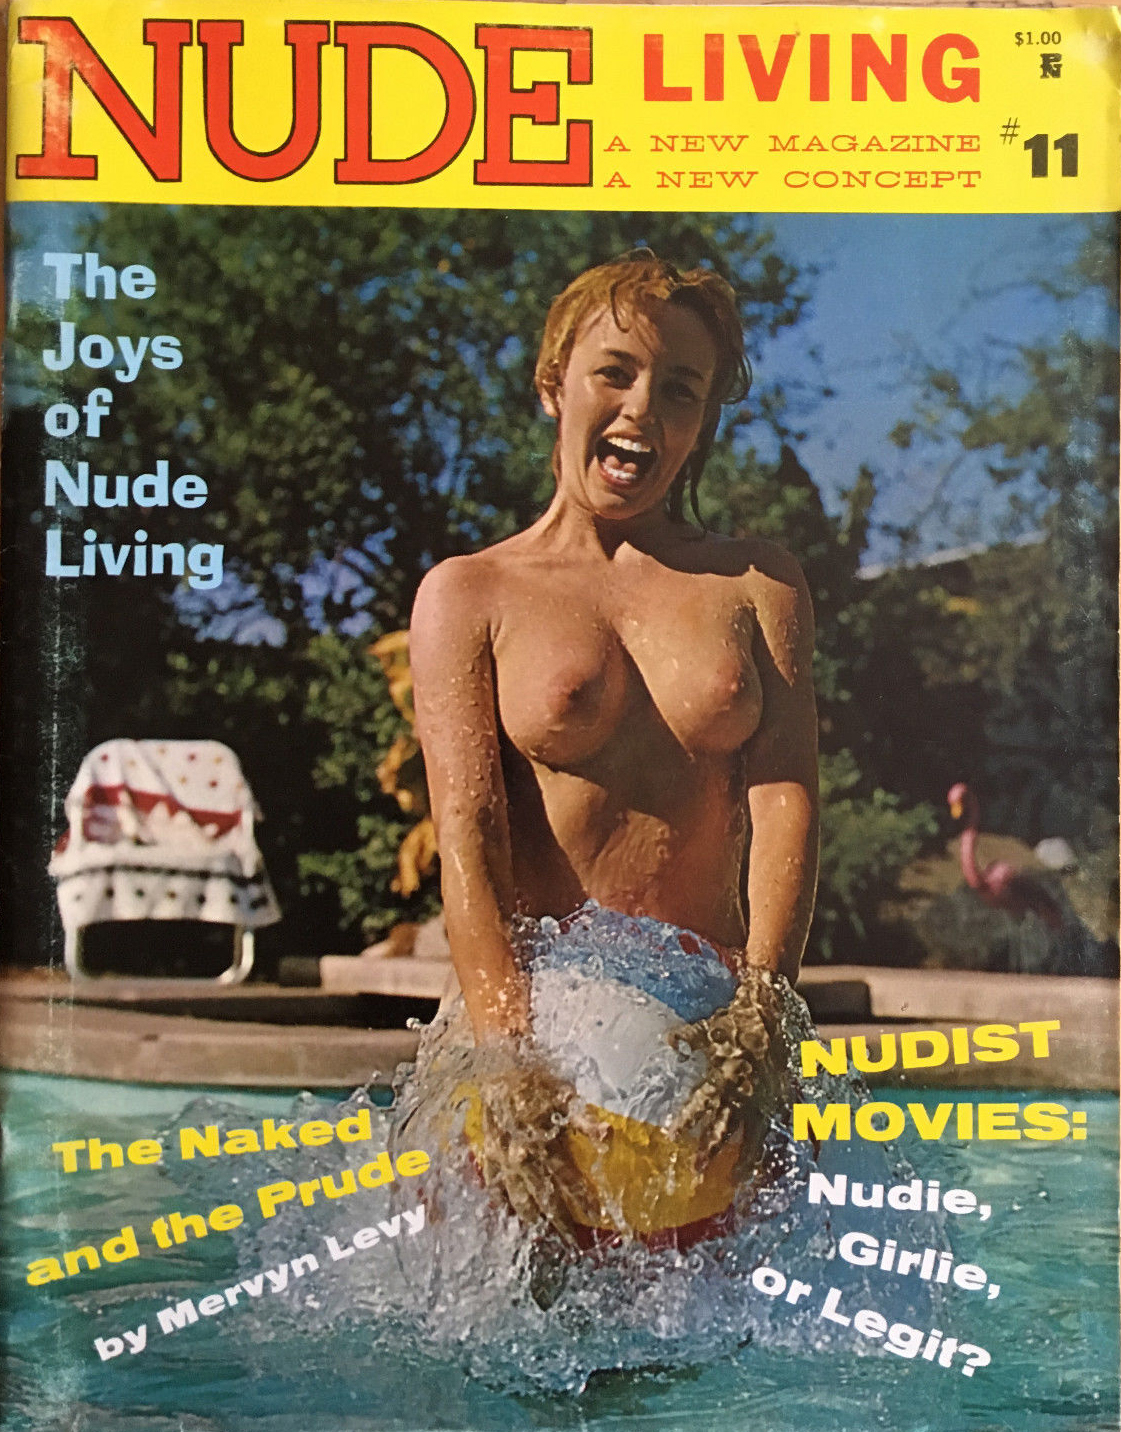 Nude Life # 11 magazine reviews